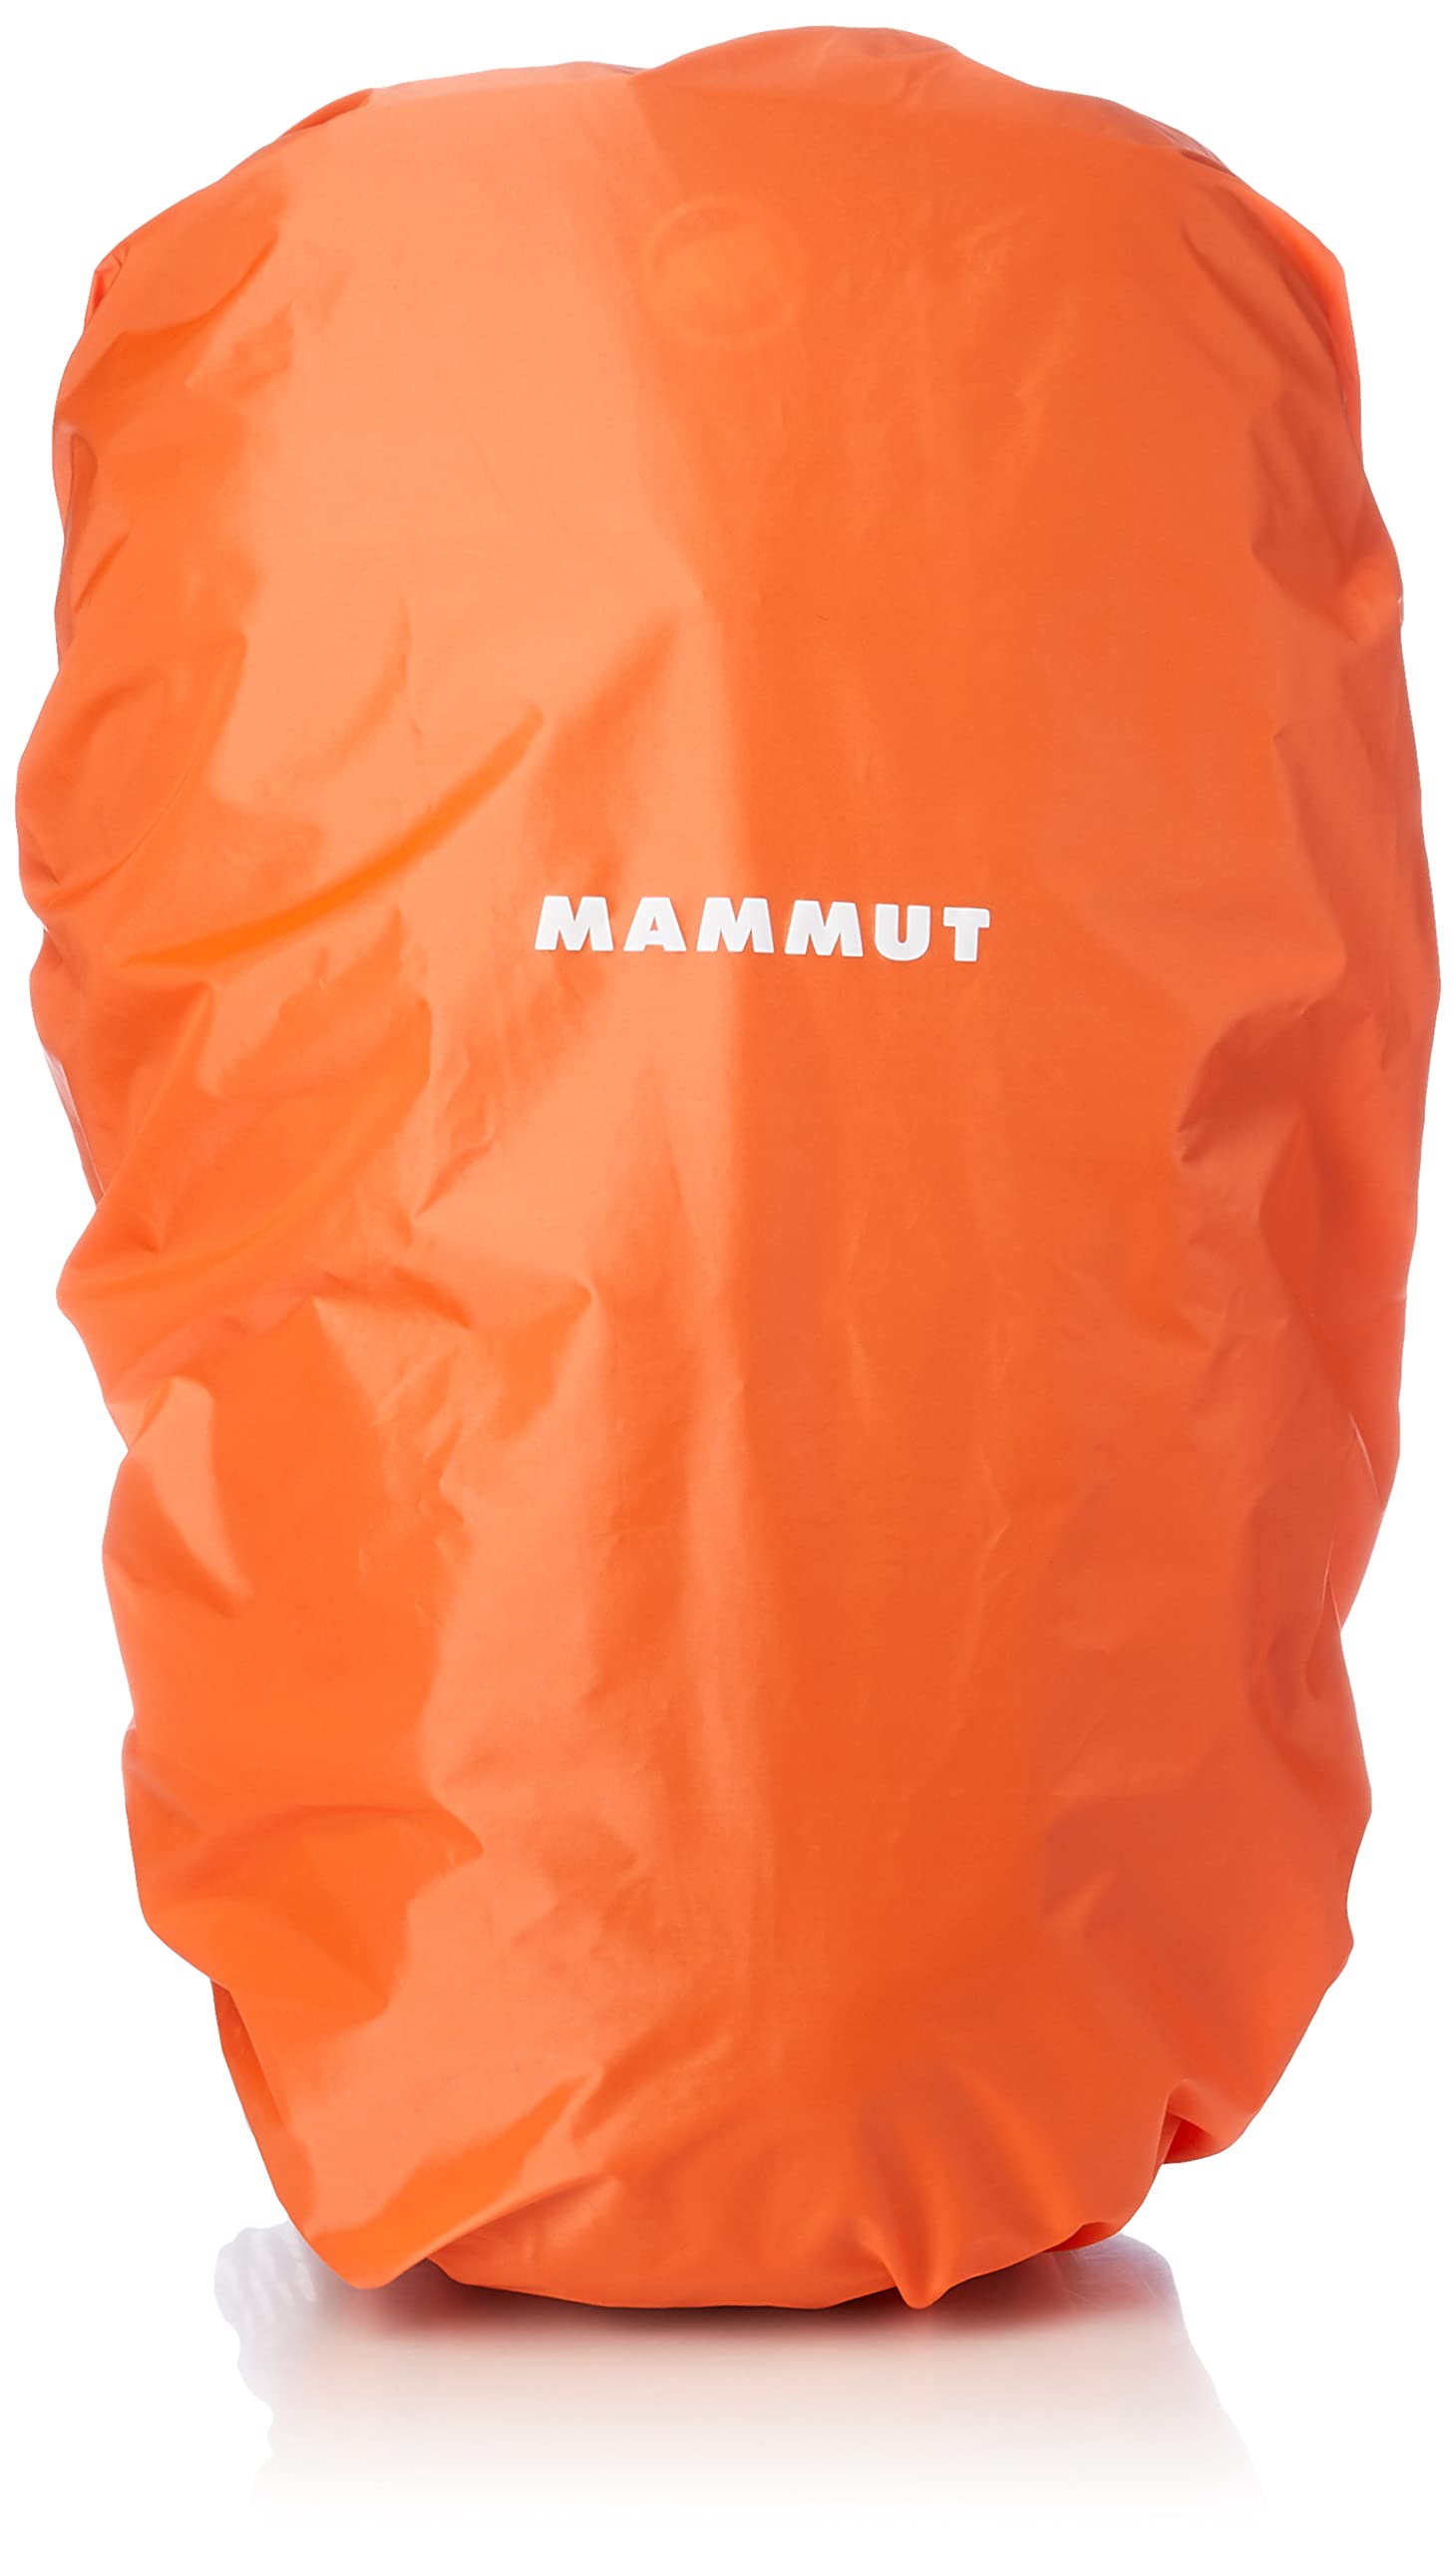 Mammut Lithium 30